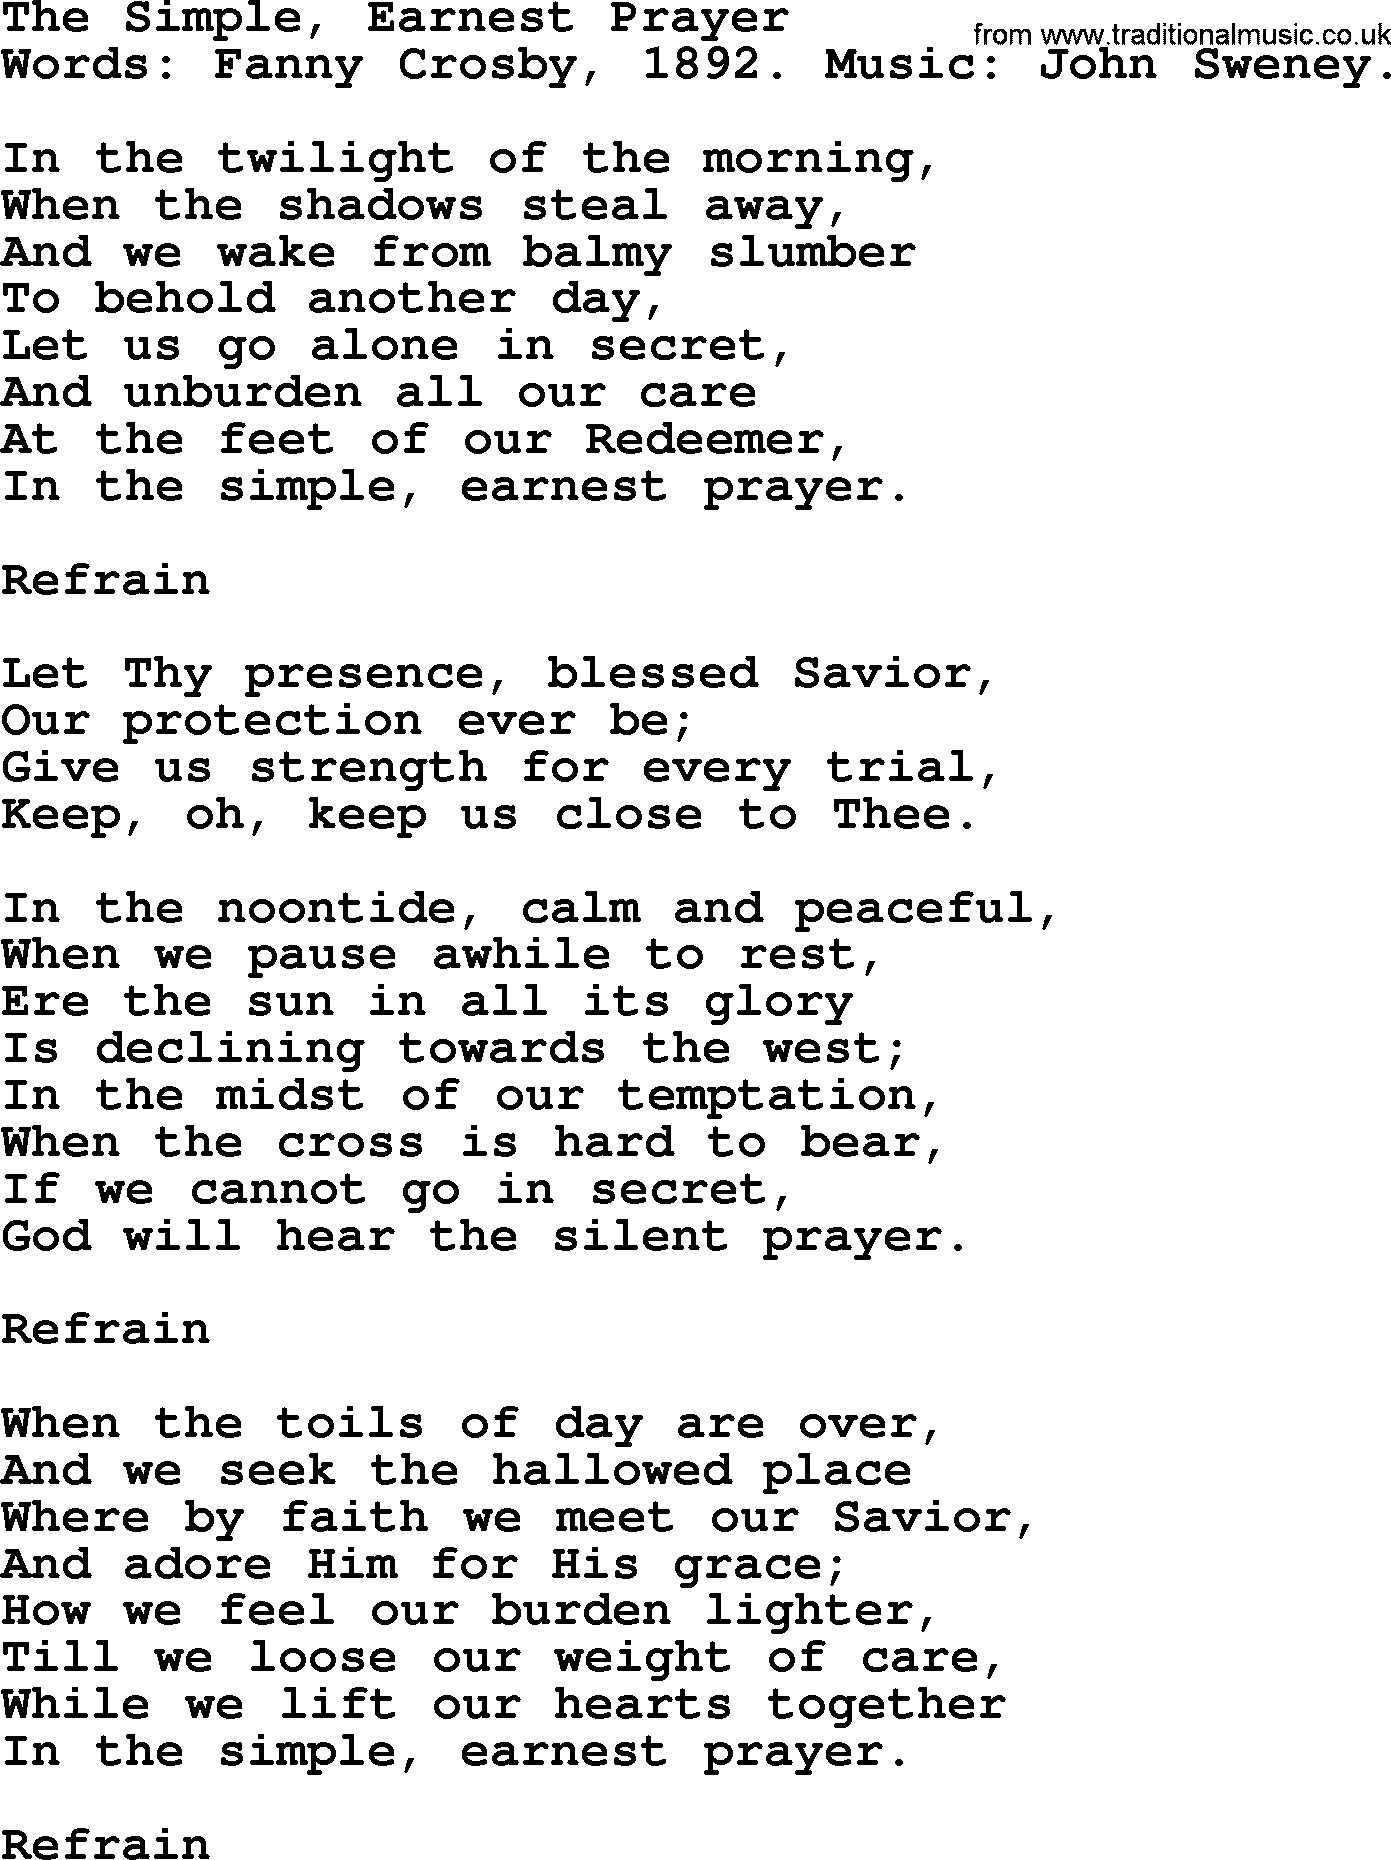 Fanny Crosby song: The Simple, Earnest Prayer, lyrics